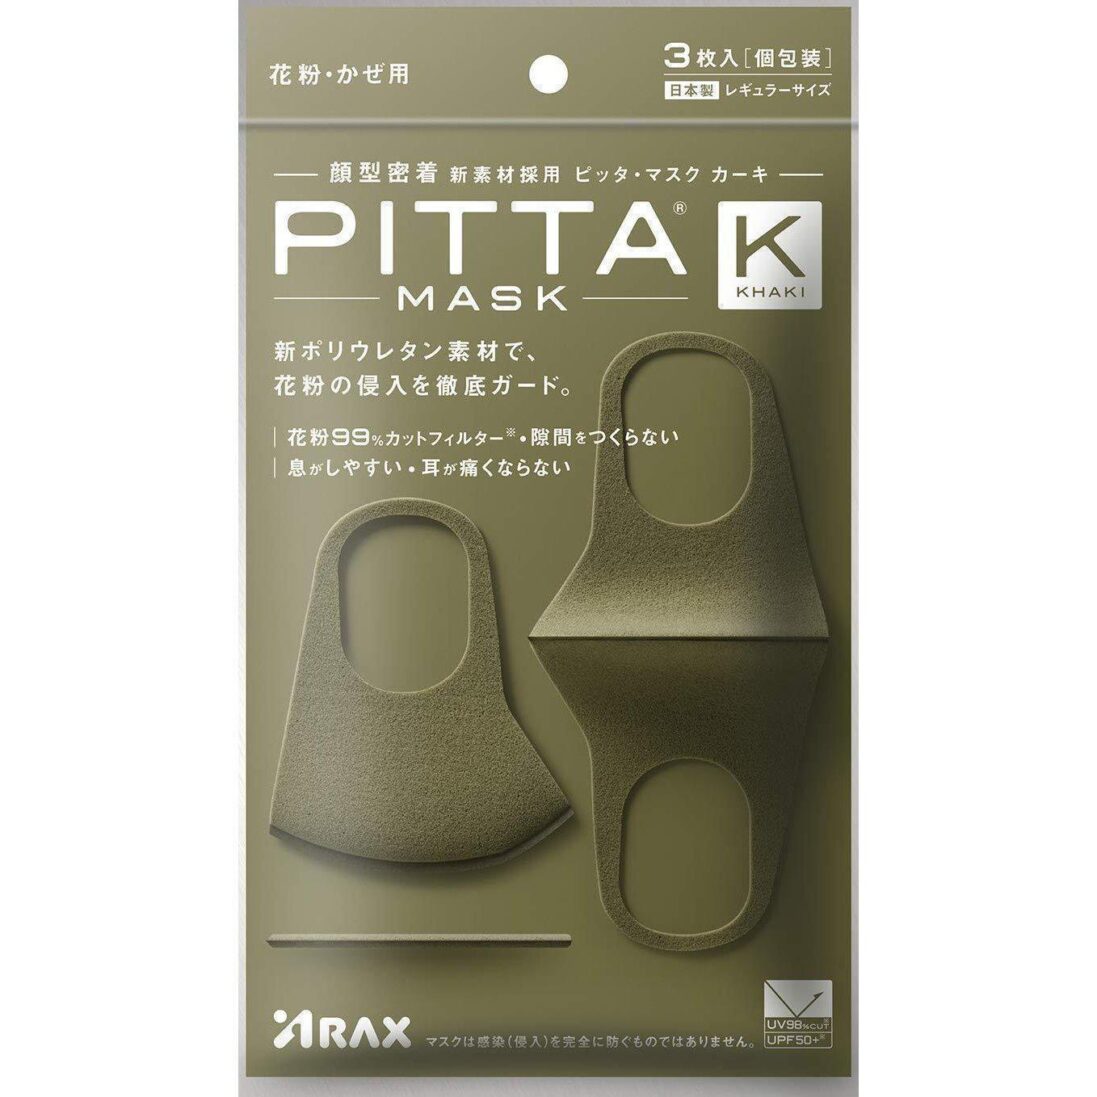 Arax Pitta Mask Khaki Regular Size 3 Masks